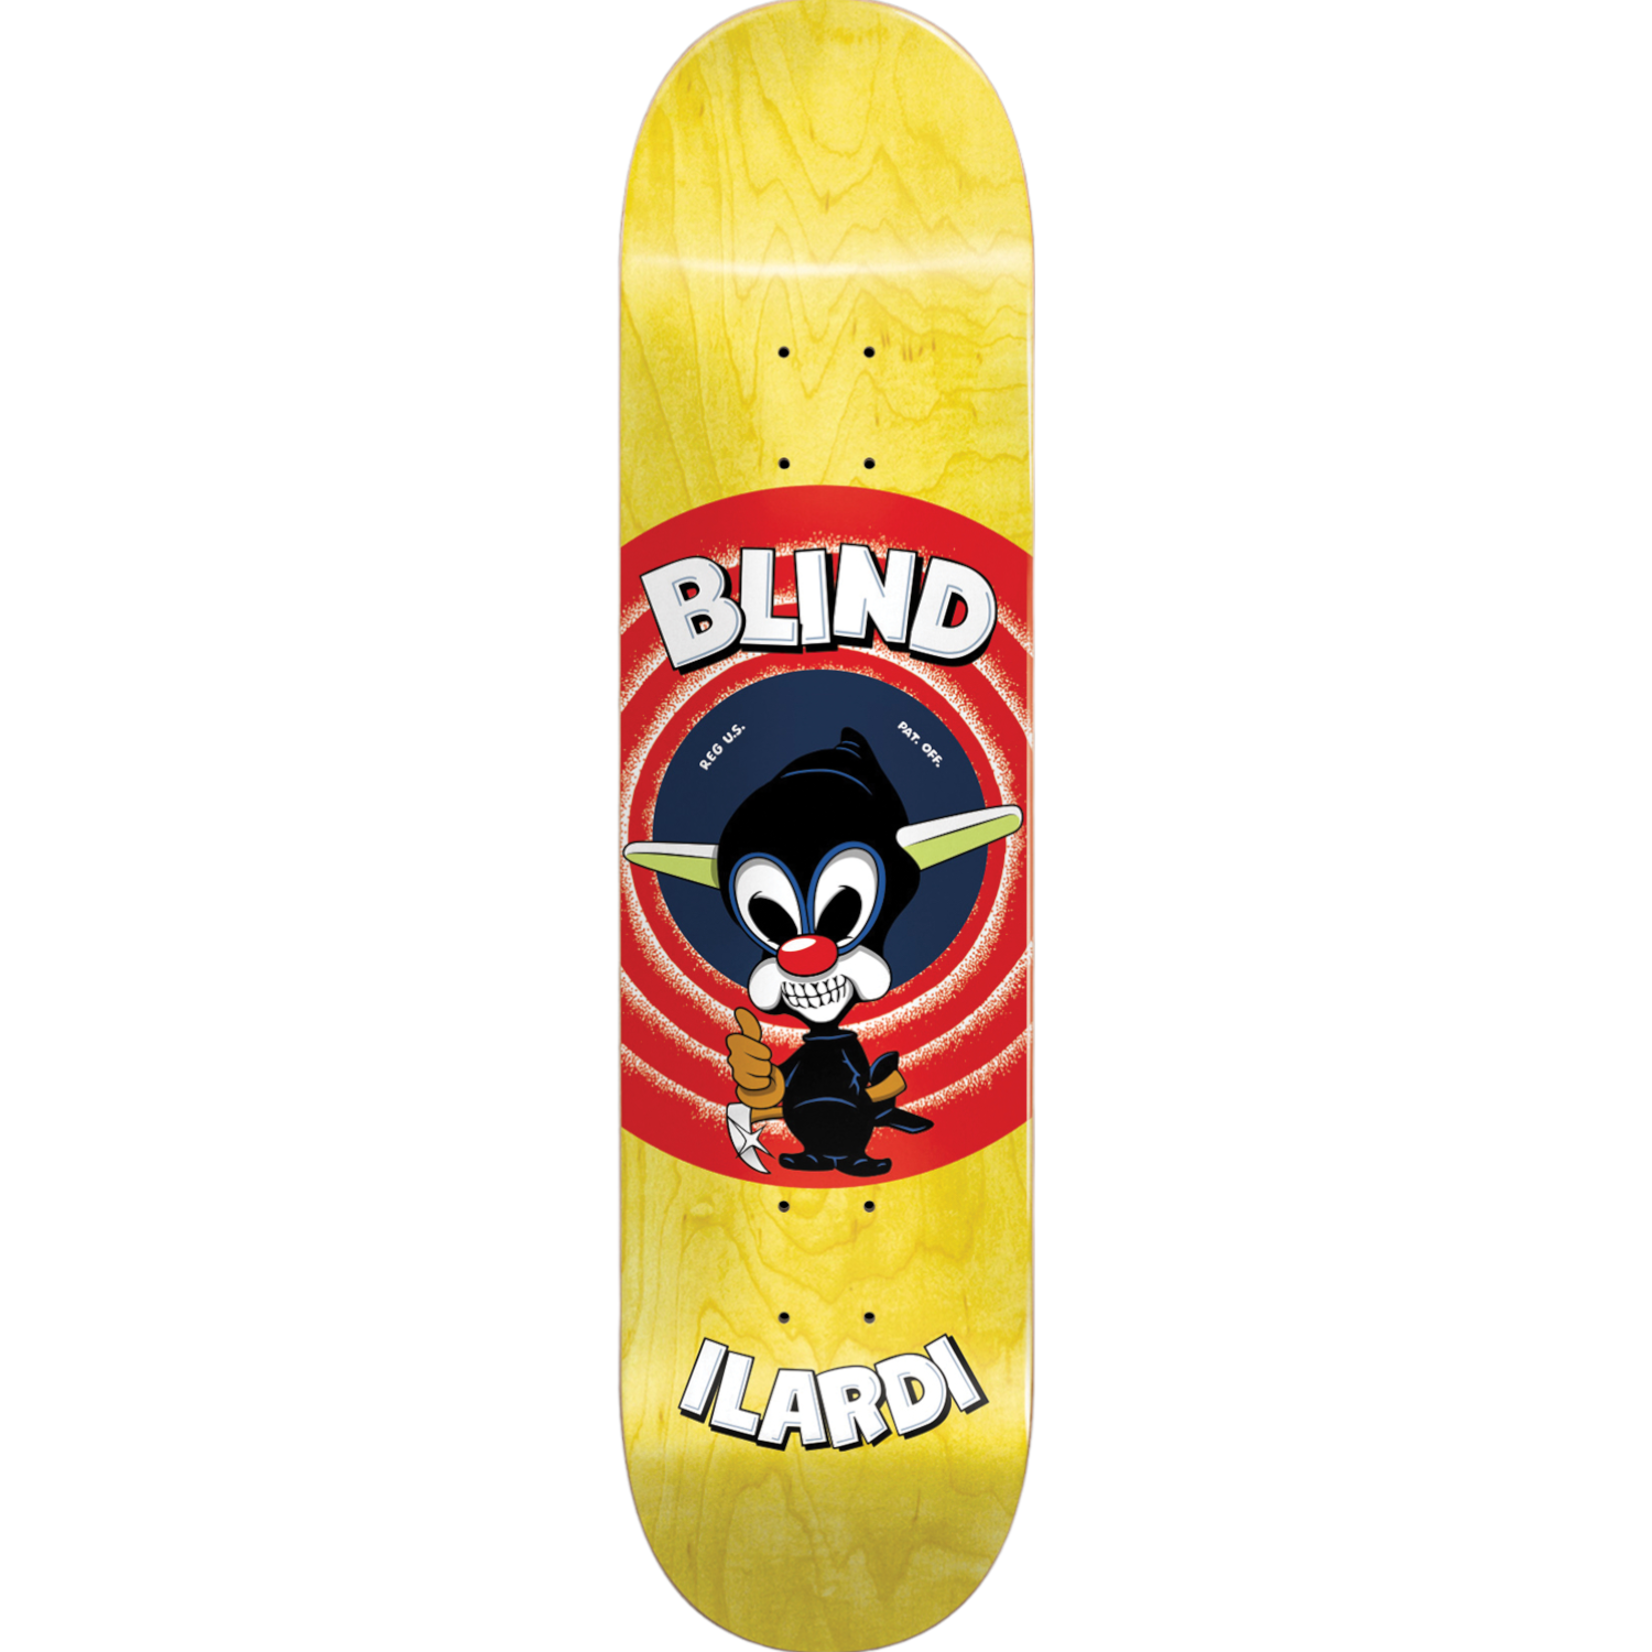 Blind Blind Ilardi Reaper Impersonator Deck 8.0